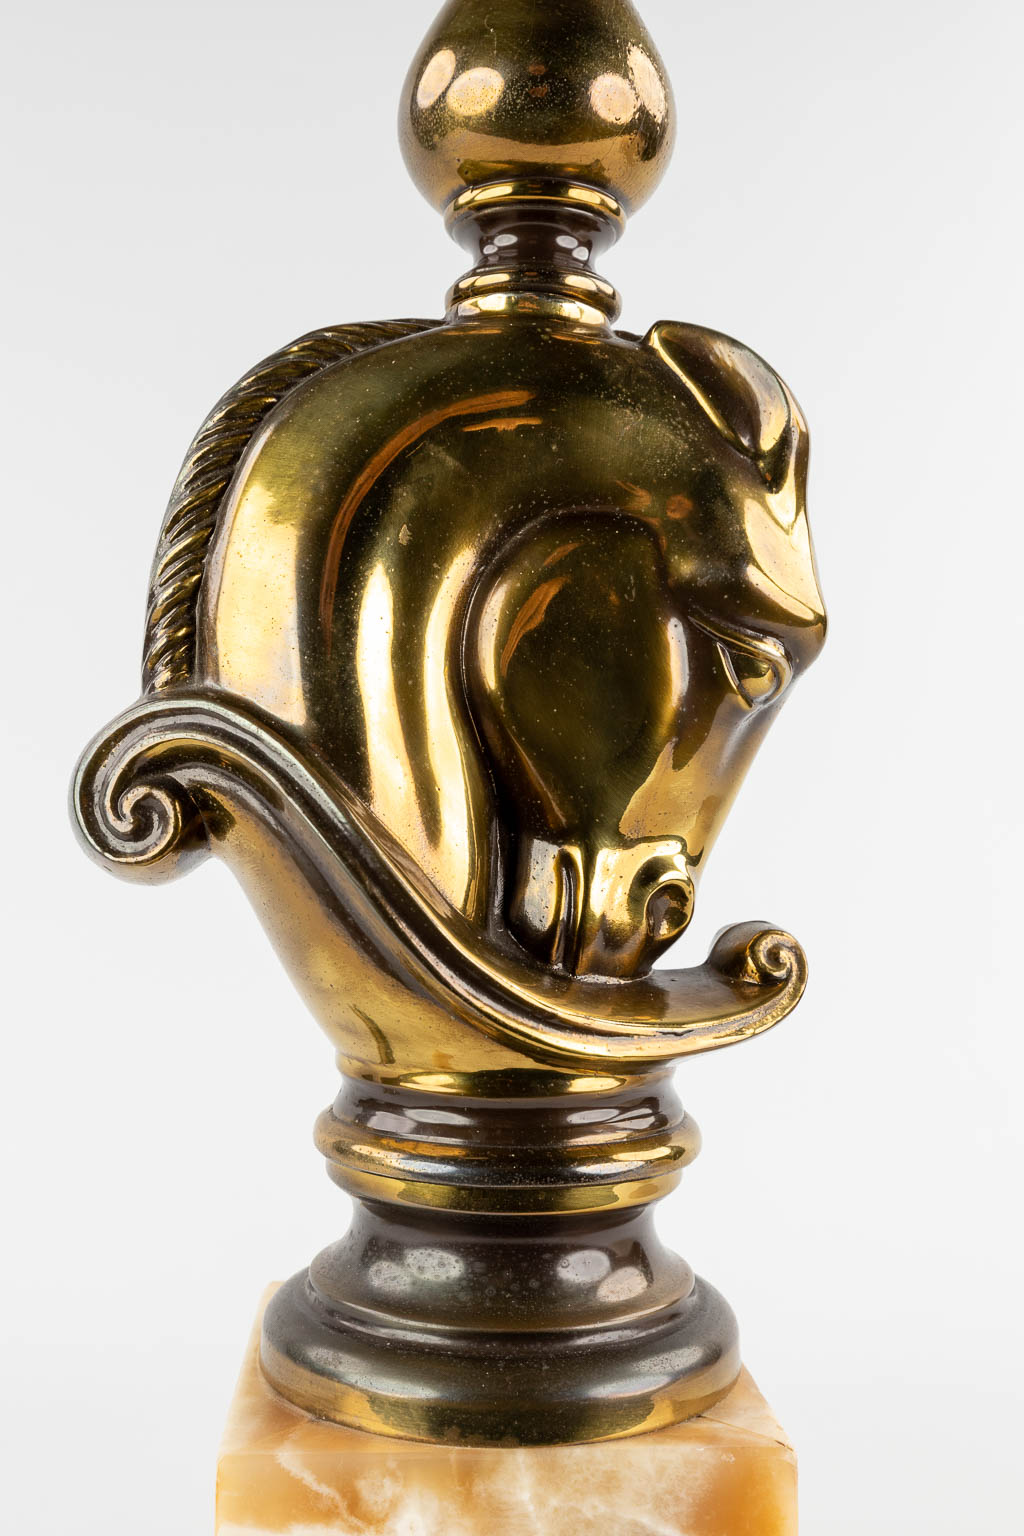 Deknudt, A table lamp with horse head, bronze on onyx. (D:14 x W:18 x H:60 cm)